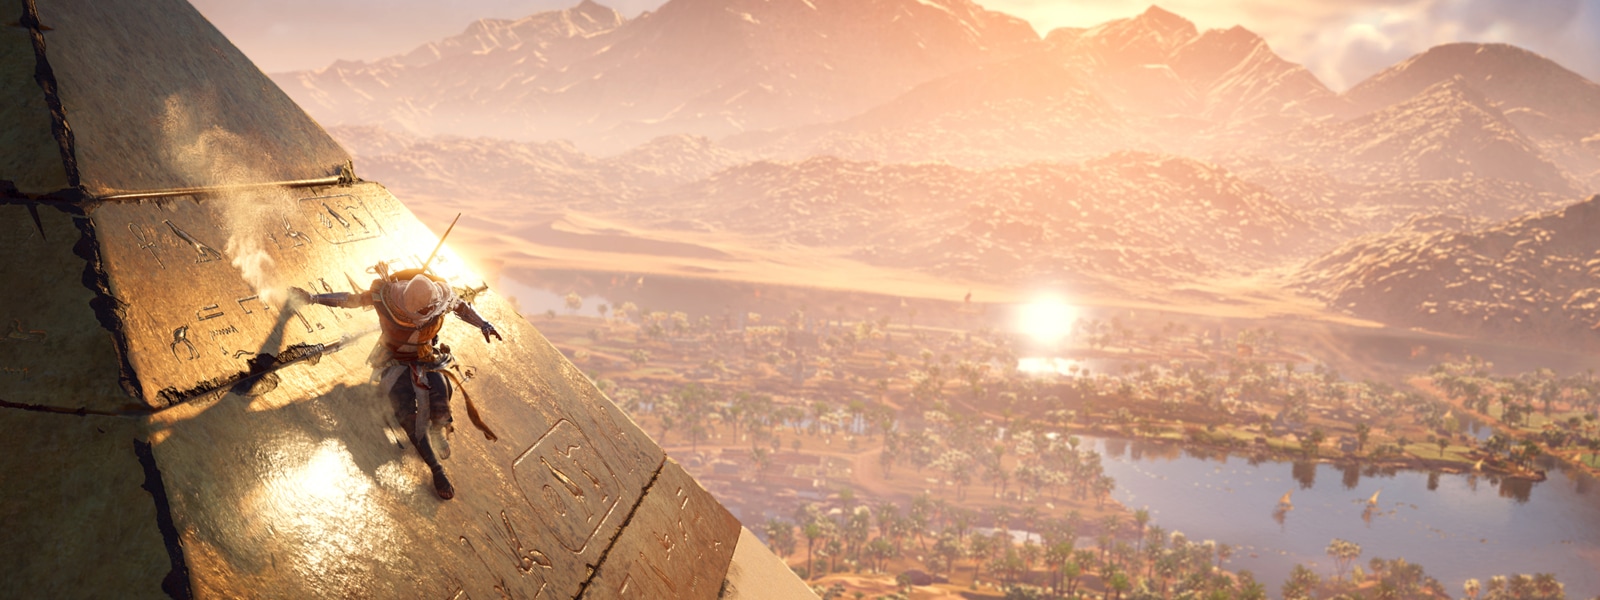 Assassins Creed Origins for Xbox One X